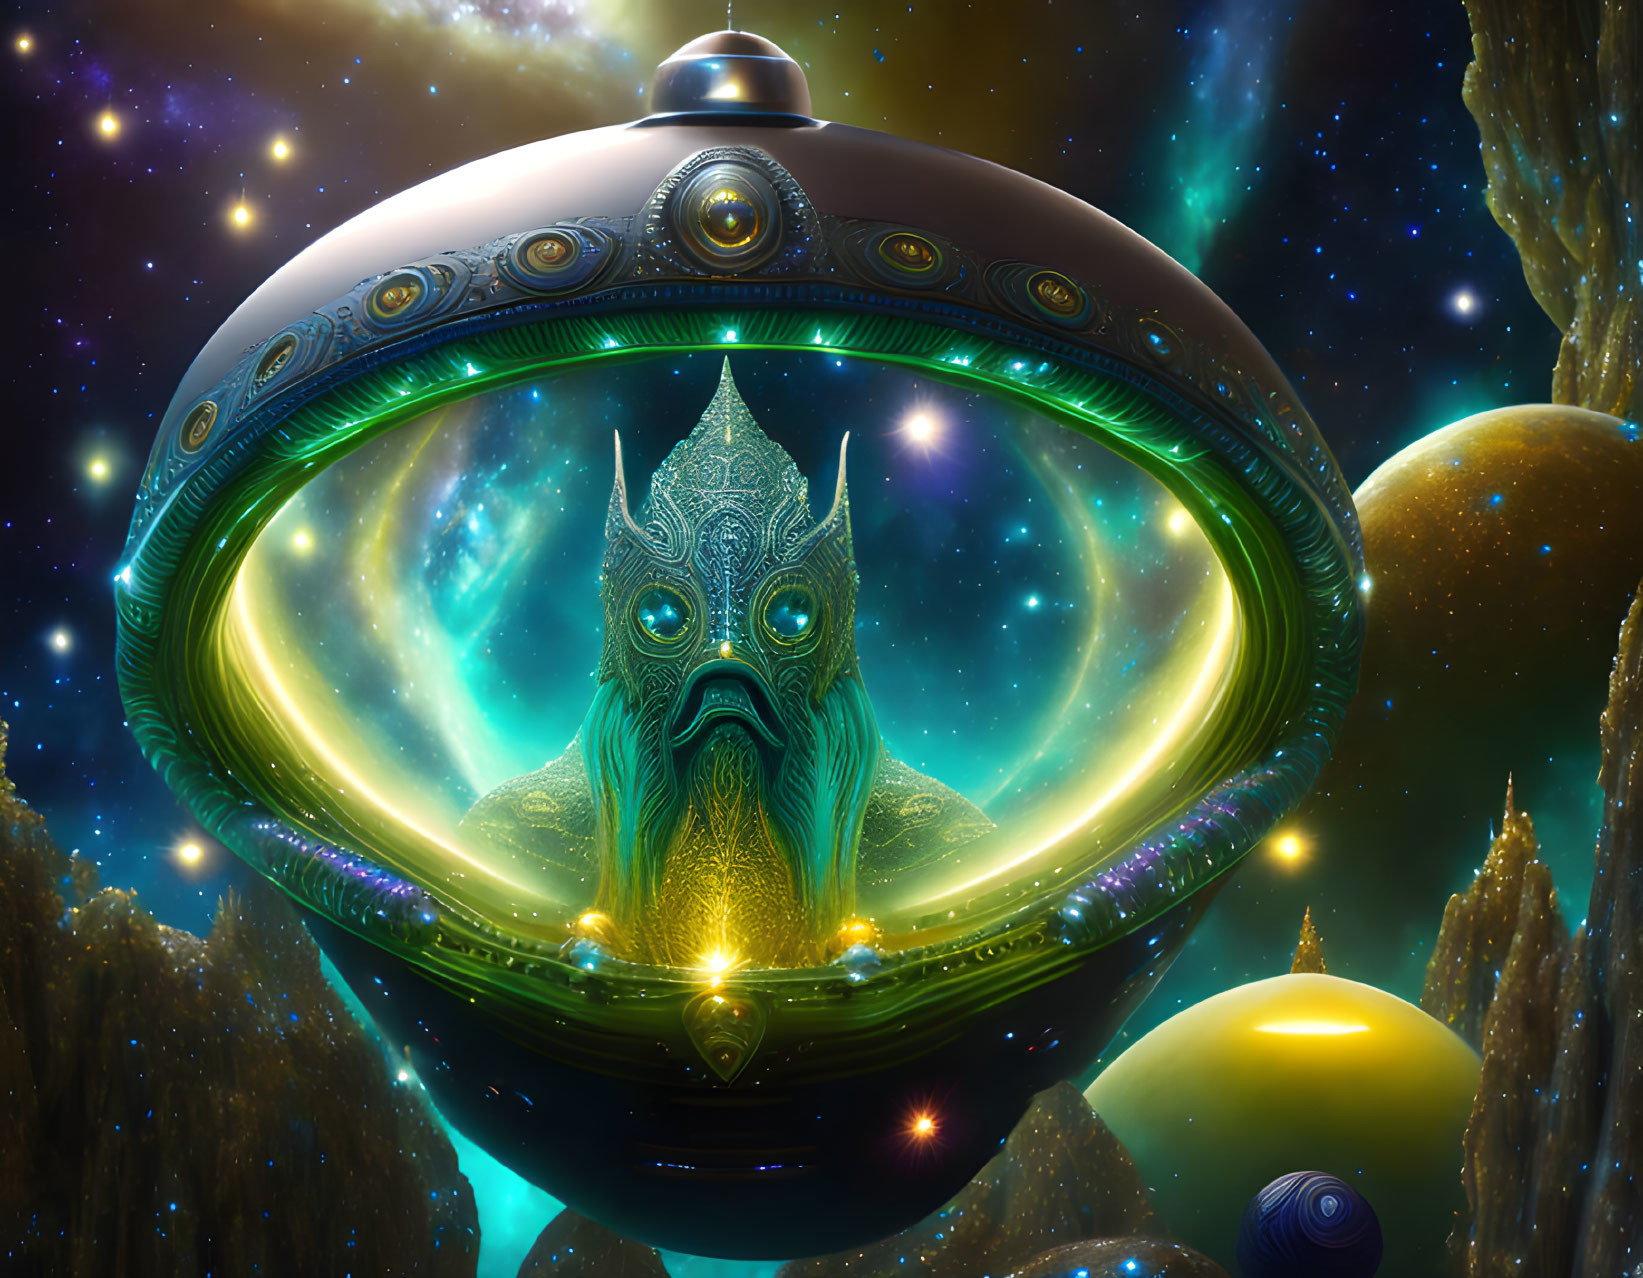 Golden-masked alien in circular spaceship with celestial backdrop